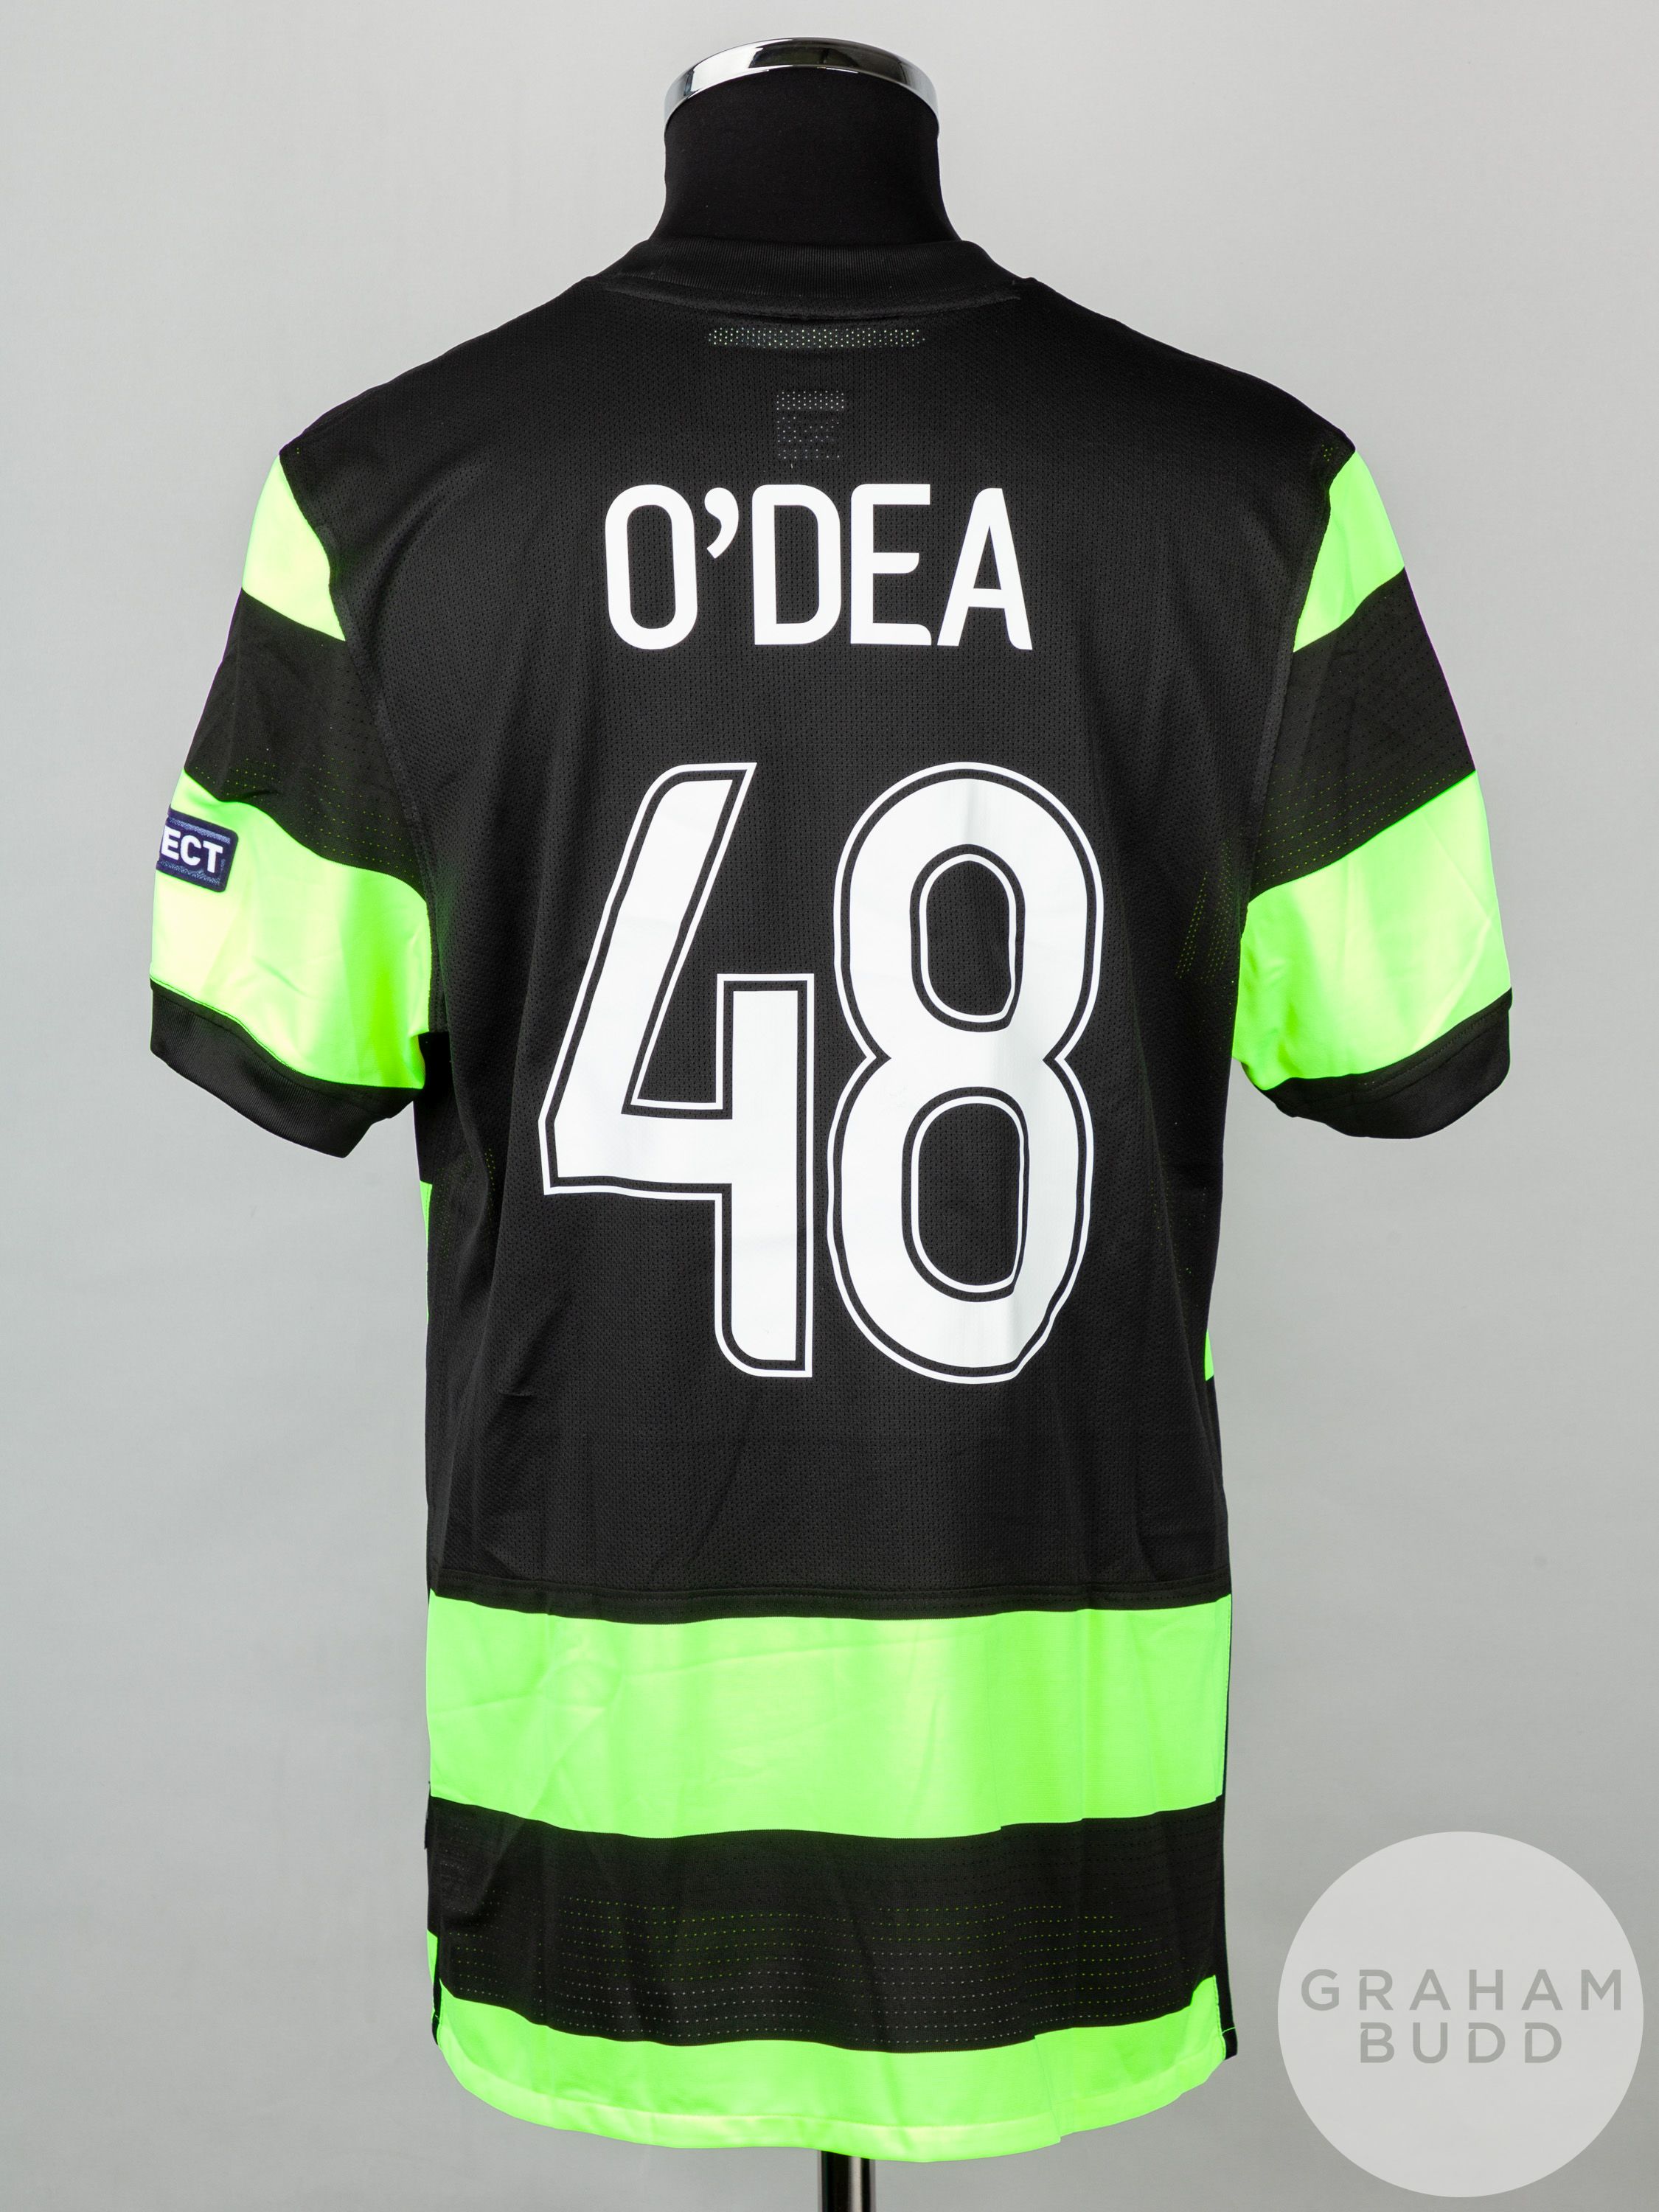 Darren O'Dea green and black No.48 Celtic Champions League match worn short-sleeved shirt - Image 2 of 5